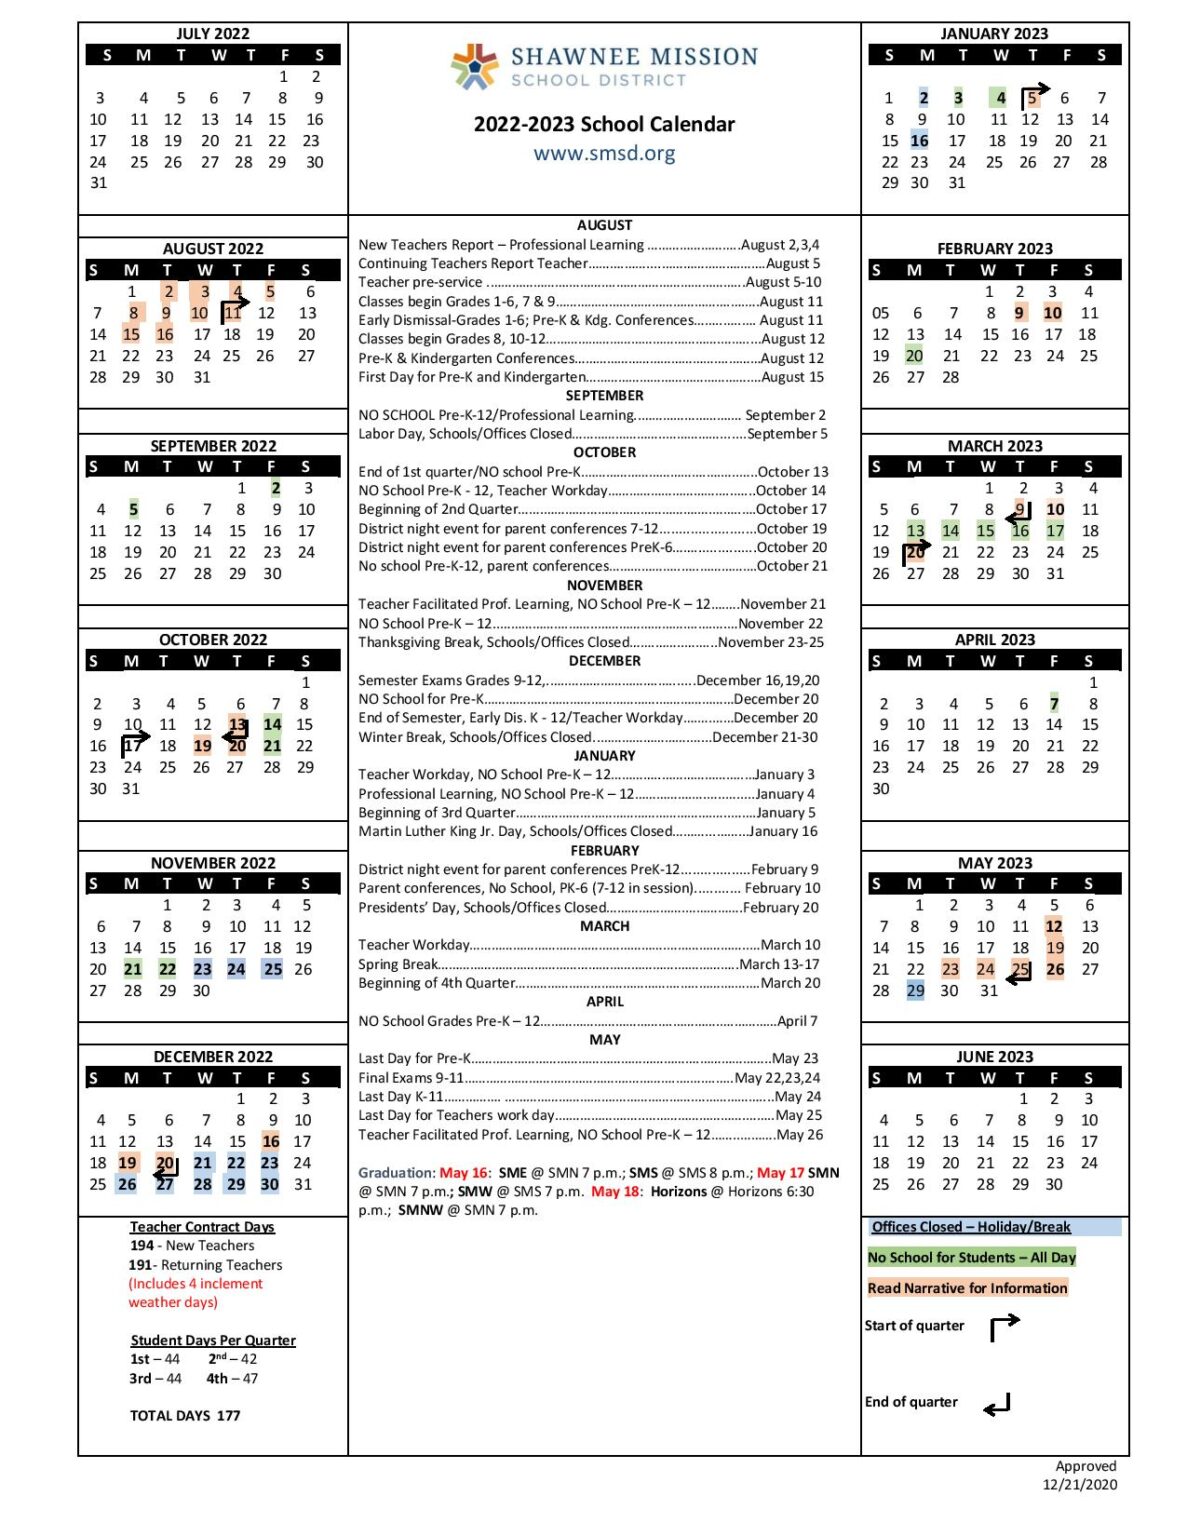 Shawnee Mission School District Calendar 2022-2023